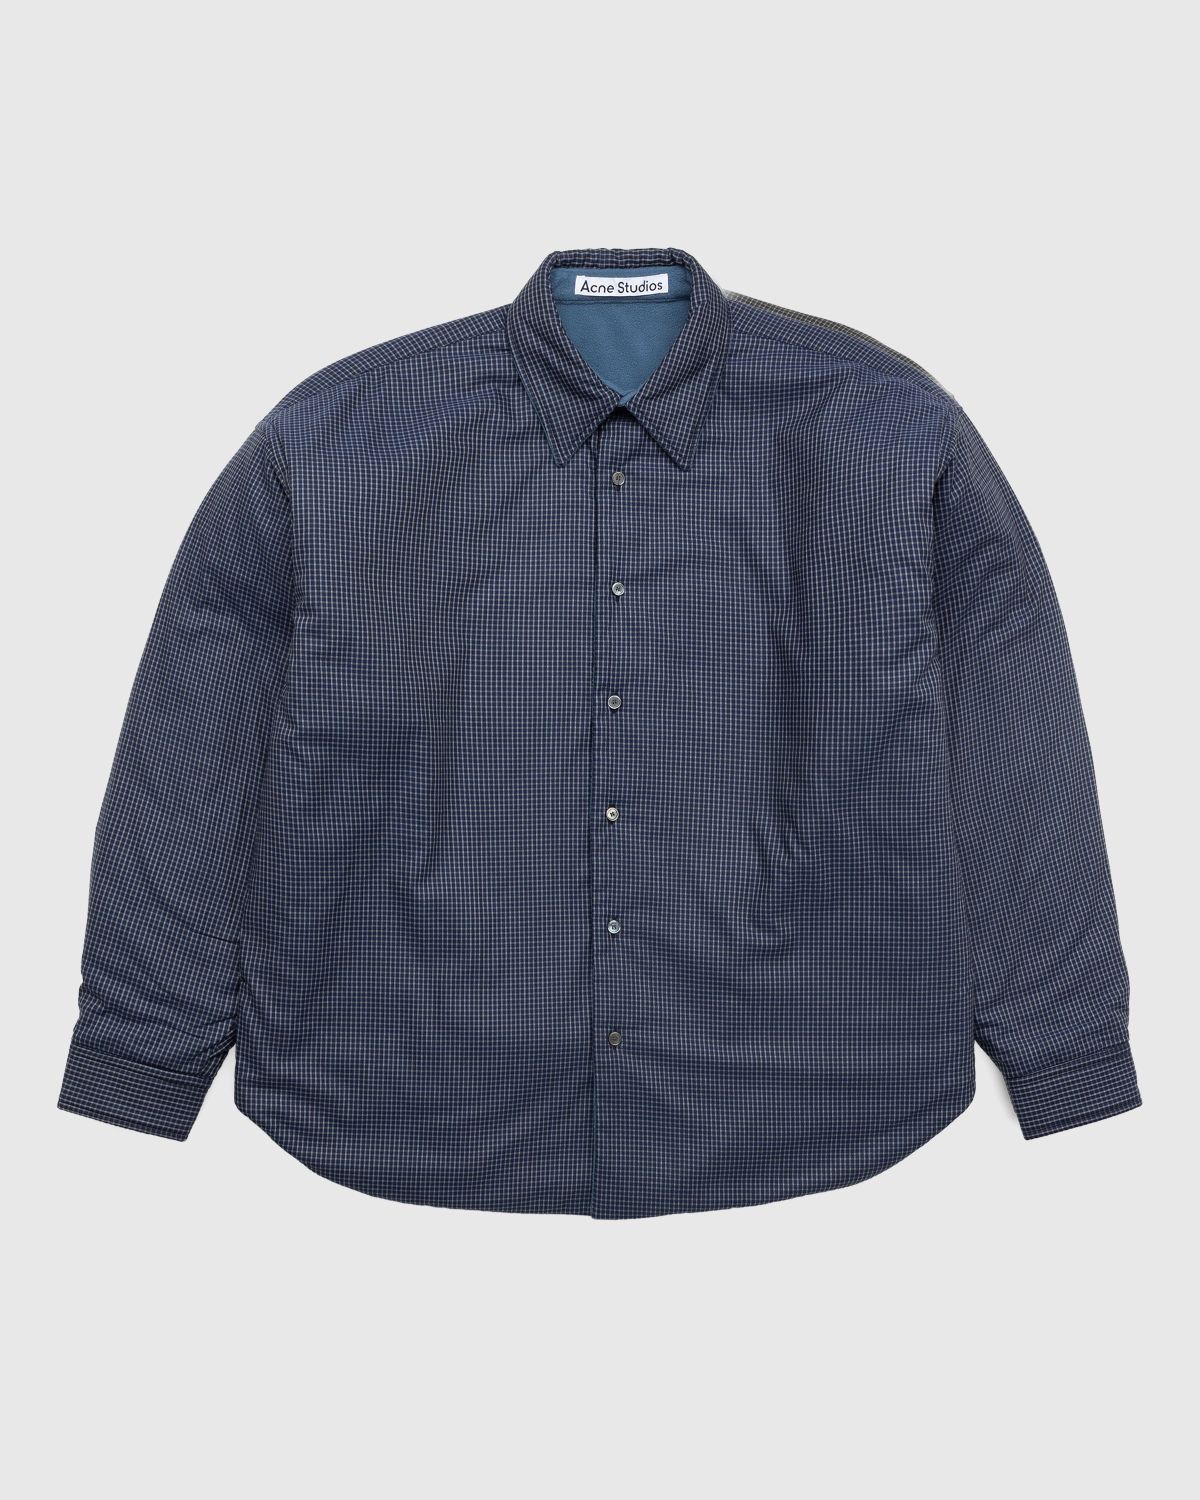 Acne Studios – Reversible Jacket Blue - Outerwear - Blue - Image 1